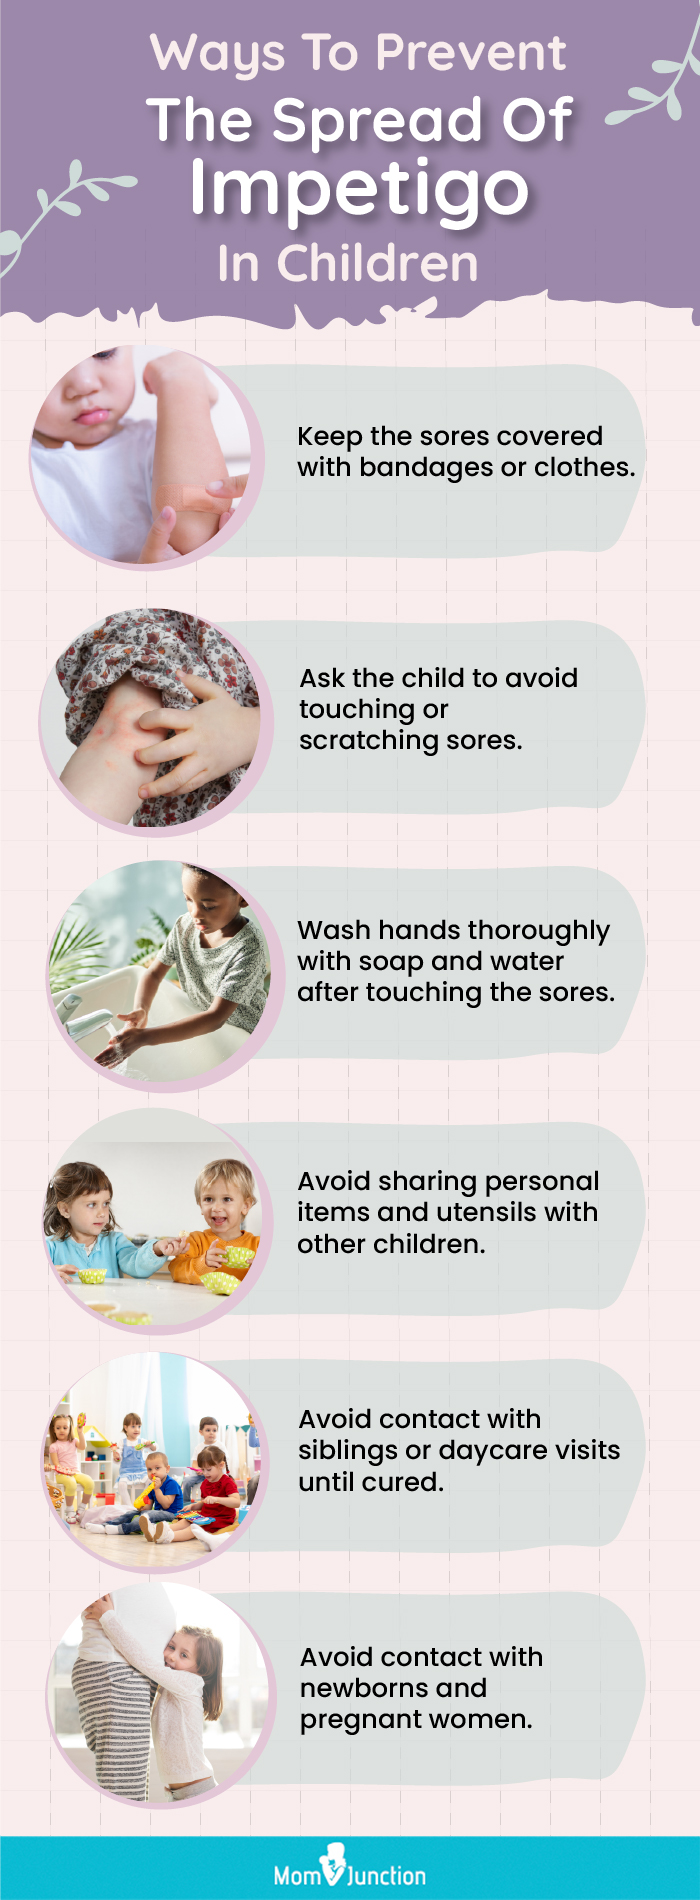 ways to prevent the spread of impetigo in children (infographic)